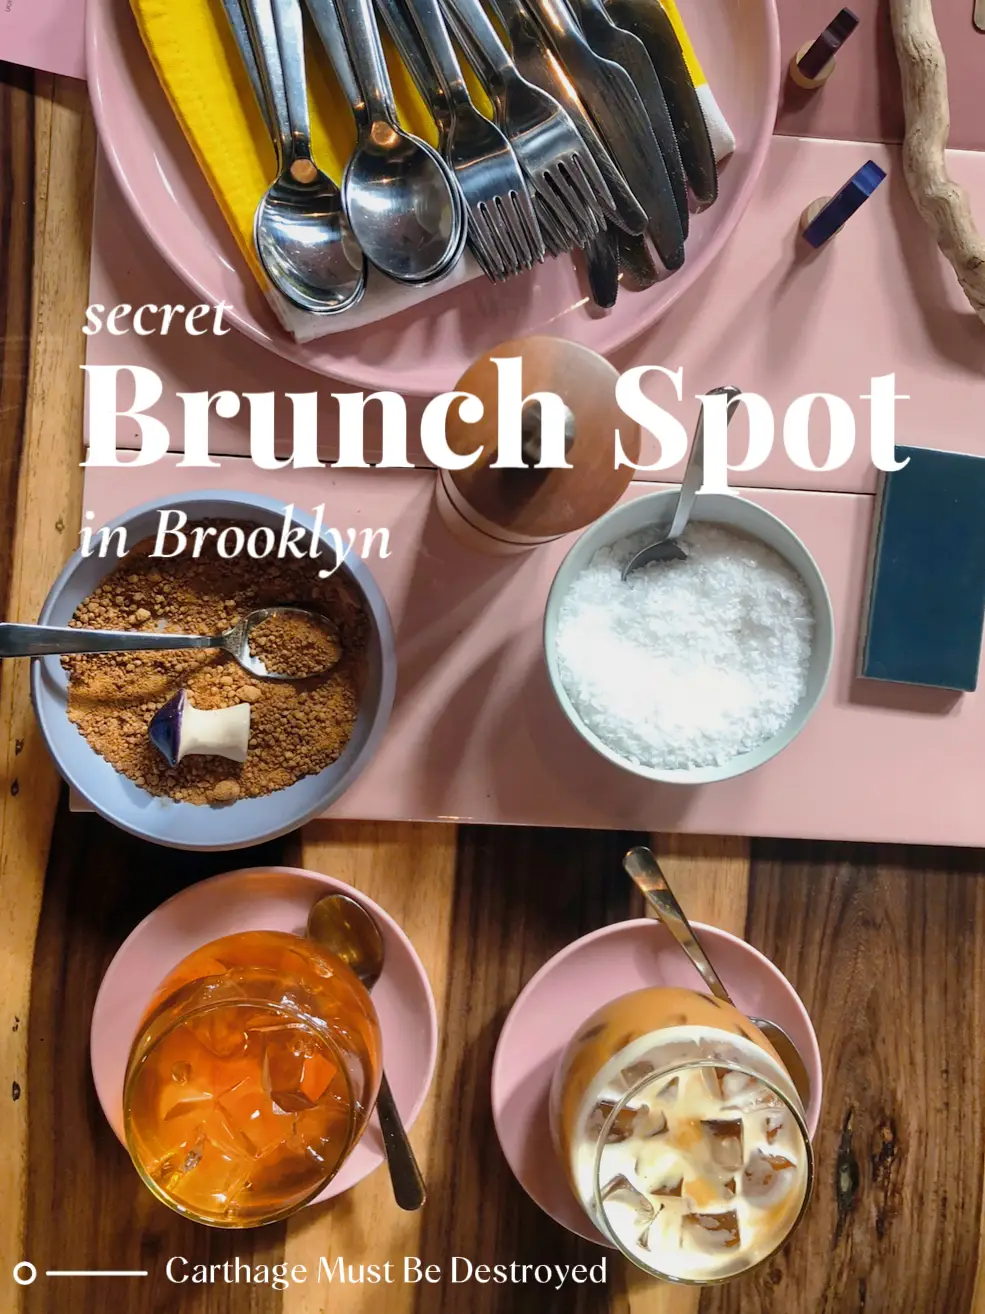 Secret brunch spot in Brooklyn! 🥬🥯☕️'s images